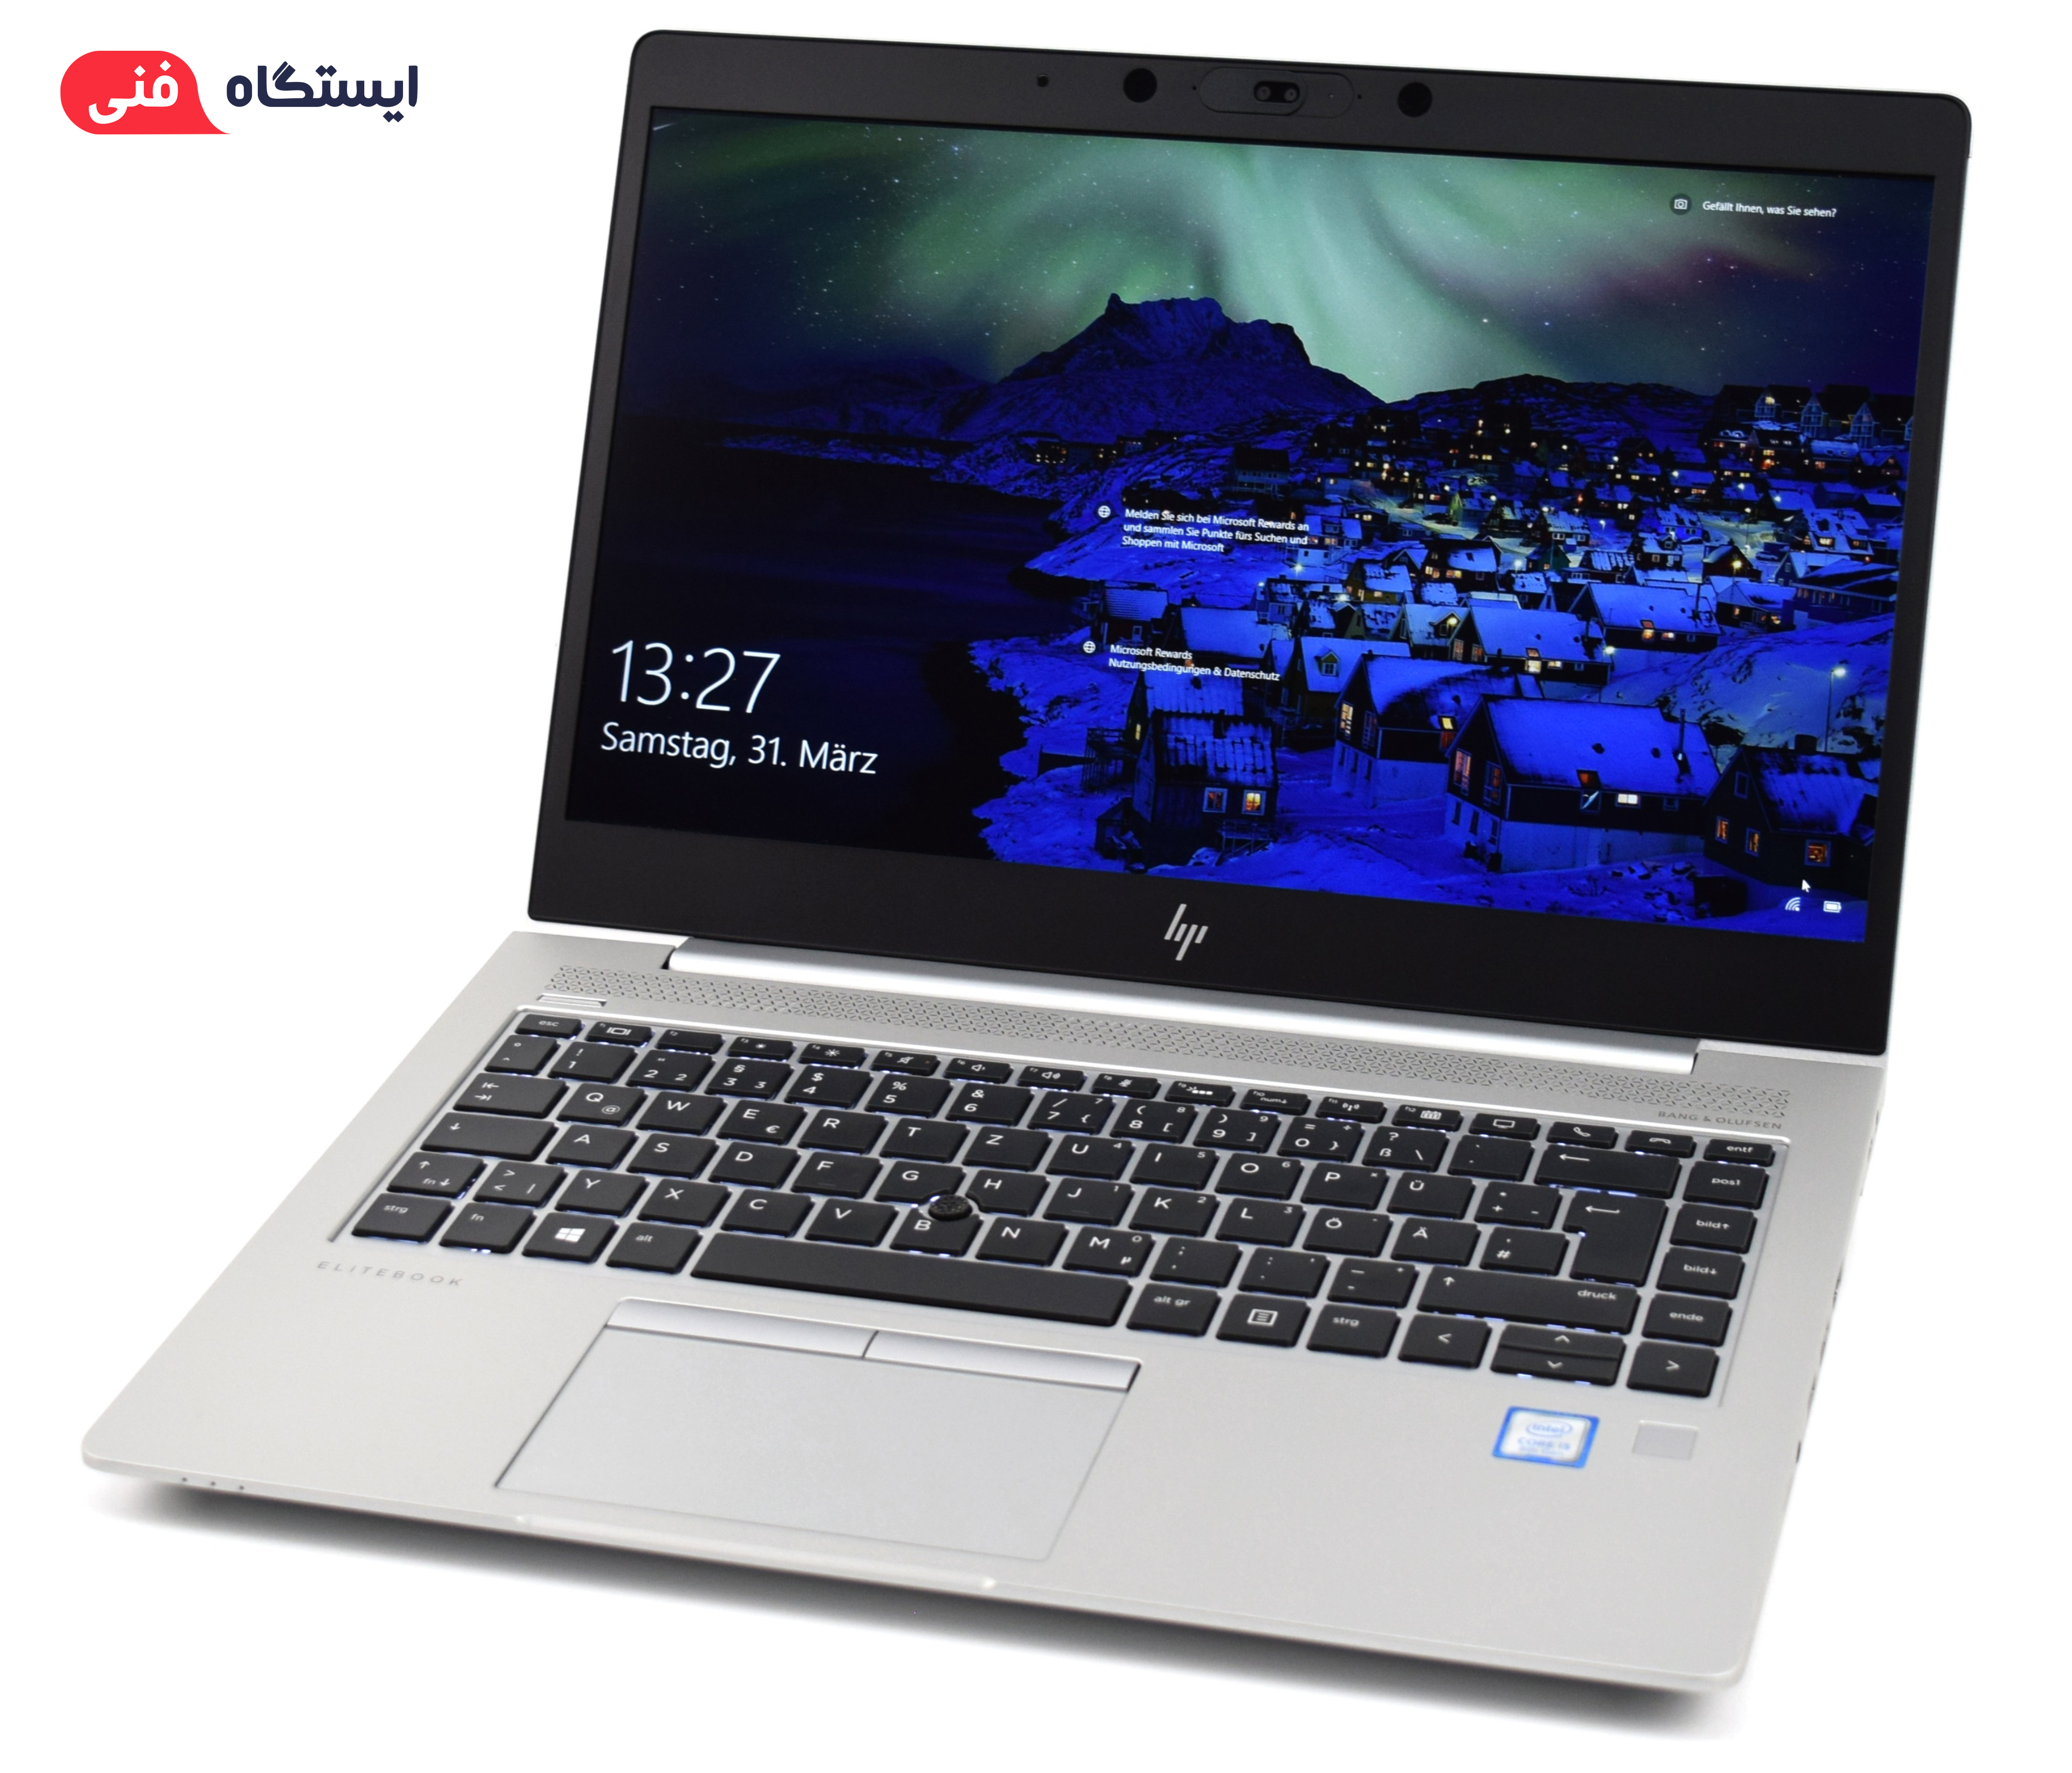 نمایشگر لپ تاپ استوک HP 840 G5